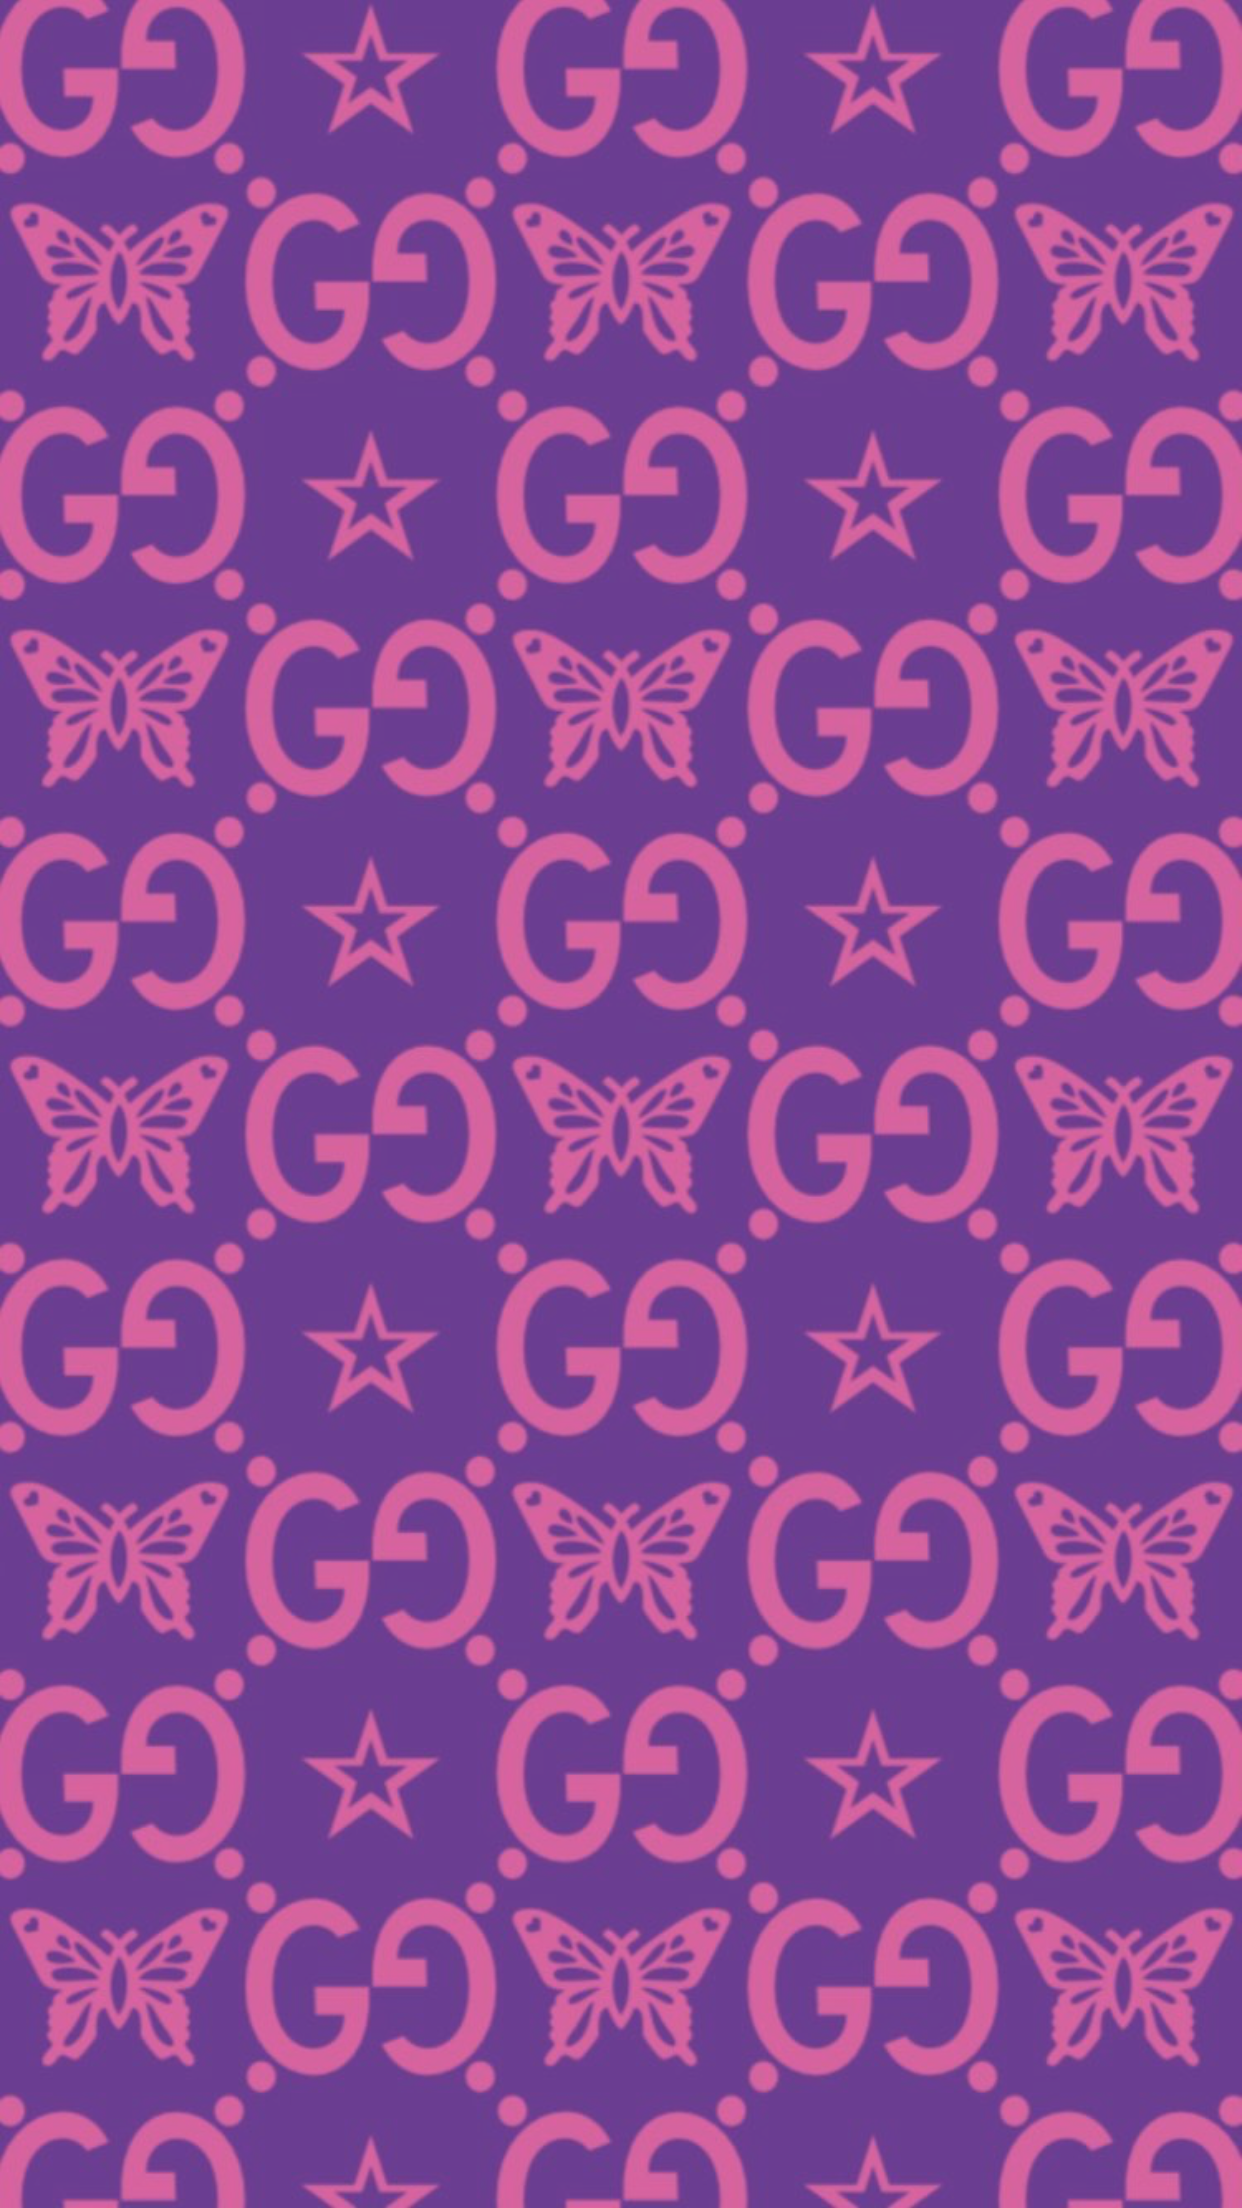 carrera cuestionario Lucro 28+] Gucci Backgrounds - WallpaperSafari